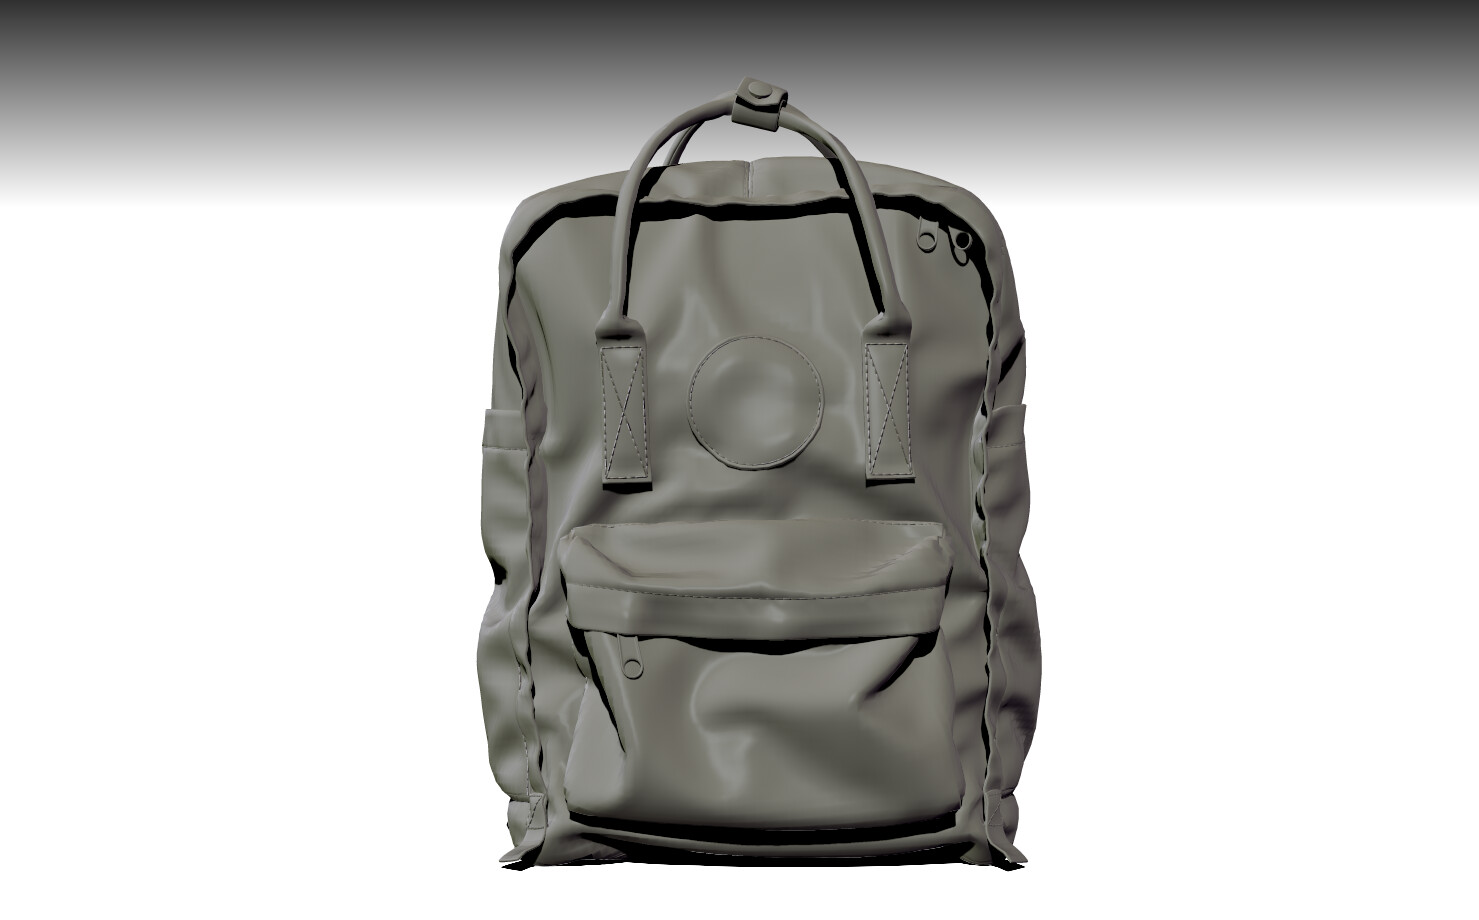 ArtStation - Lowpoly Louis Vuitton Backpack